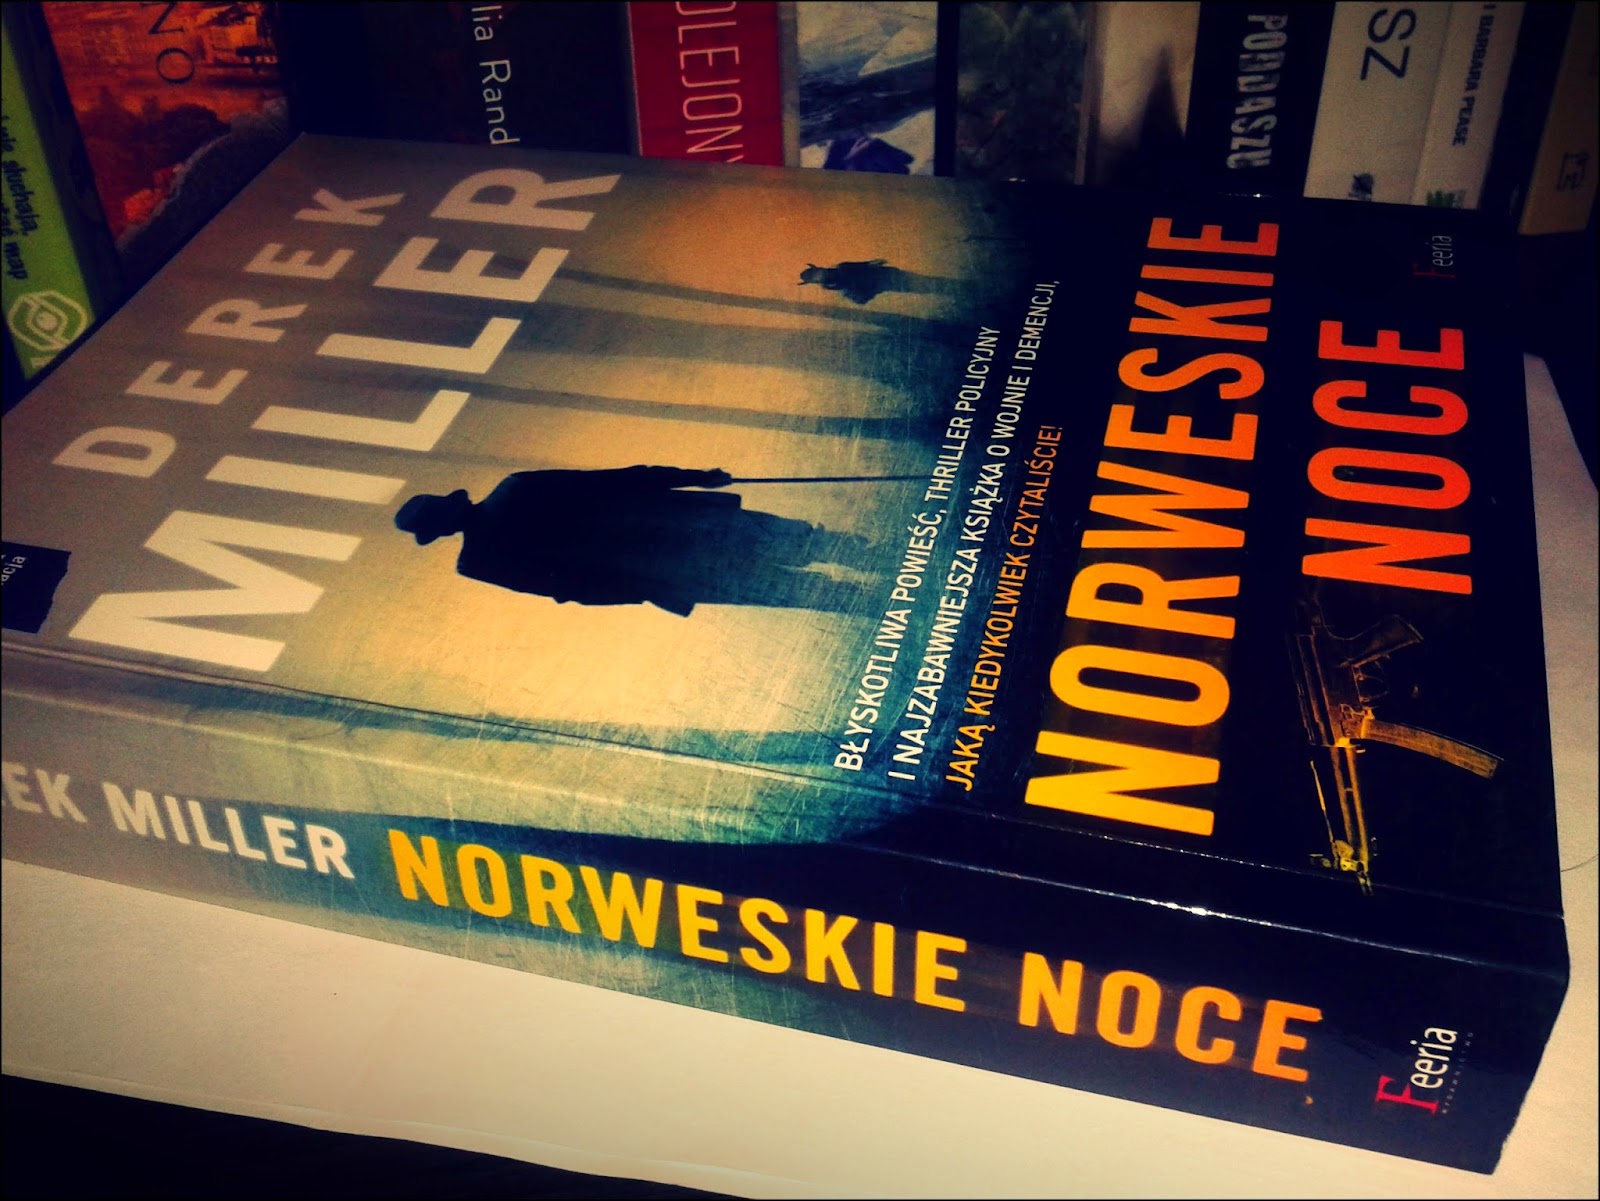 Derek Miller "Norweskie noce" zdjęcie książki